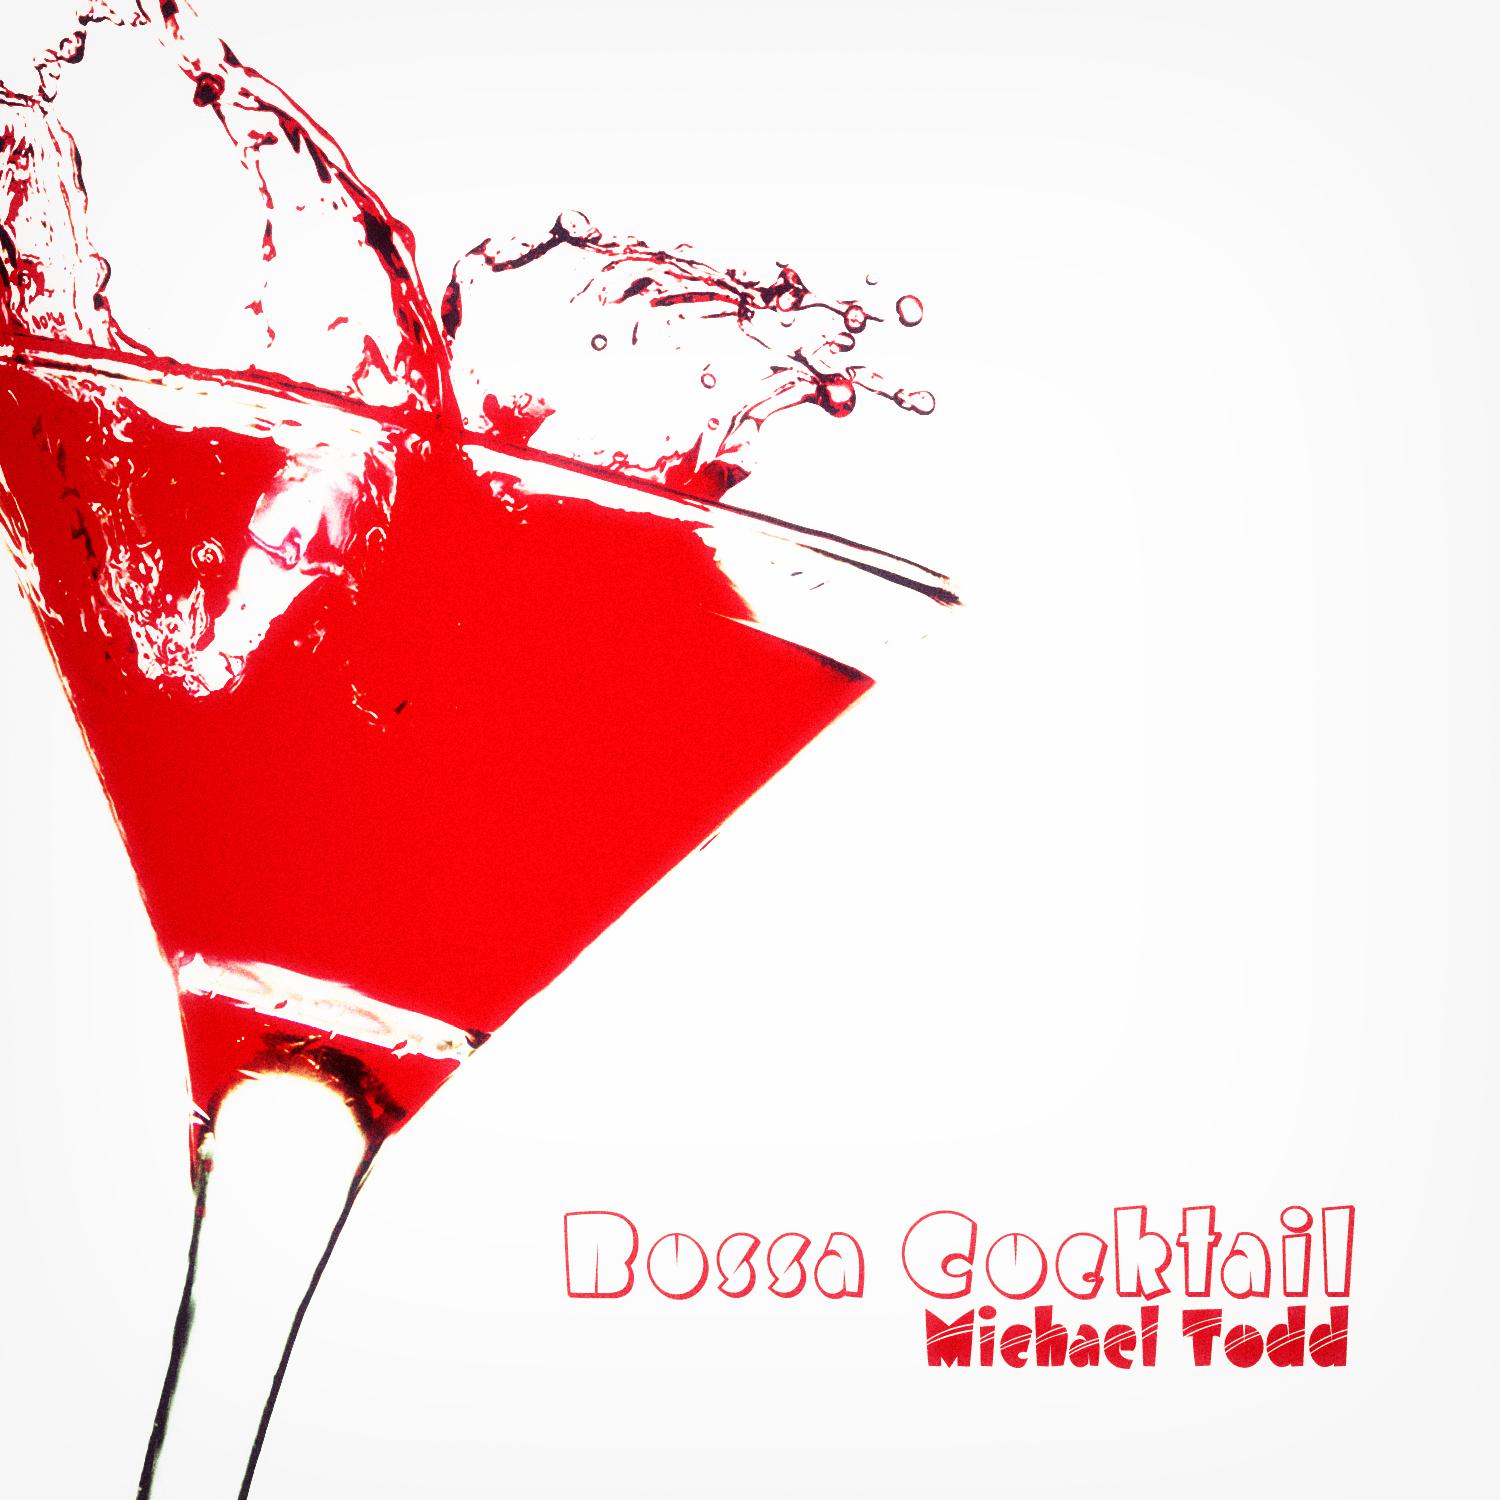 Michael Todd - Bossa Cocktail